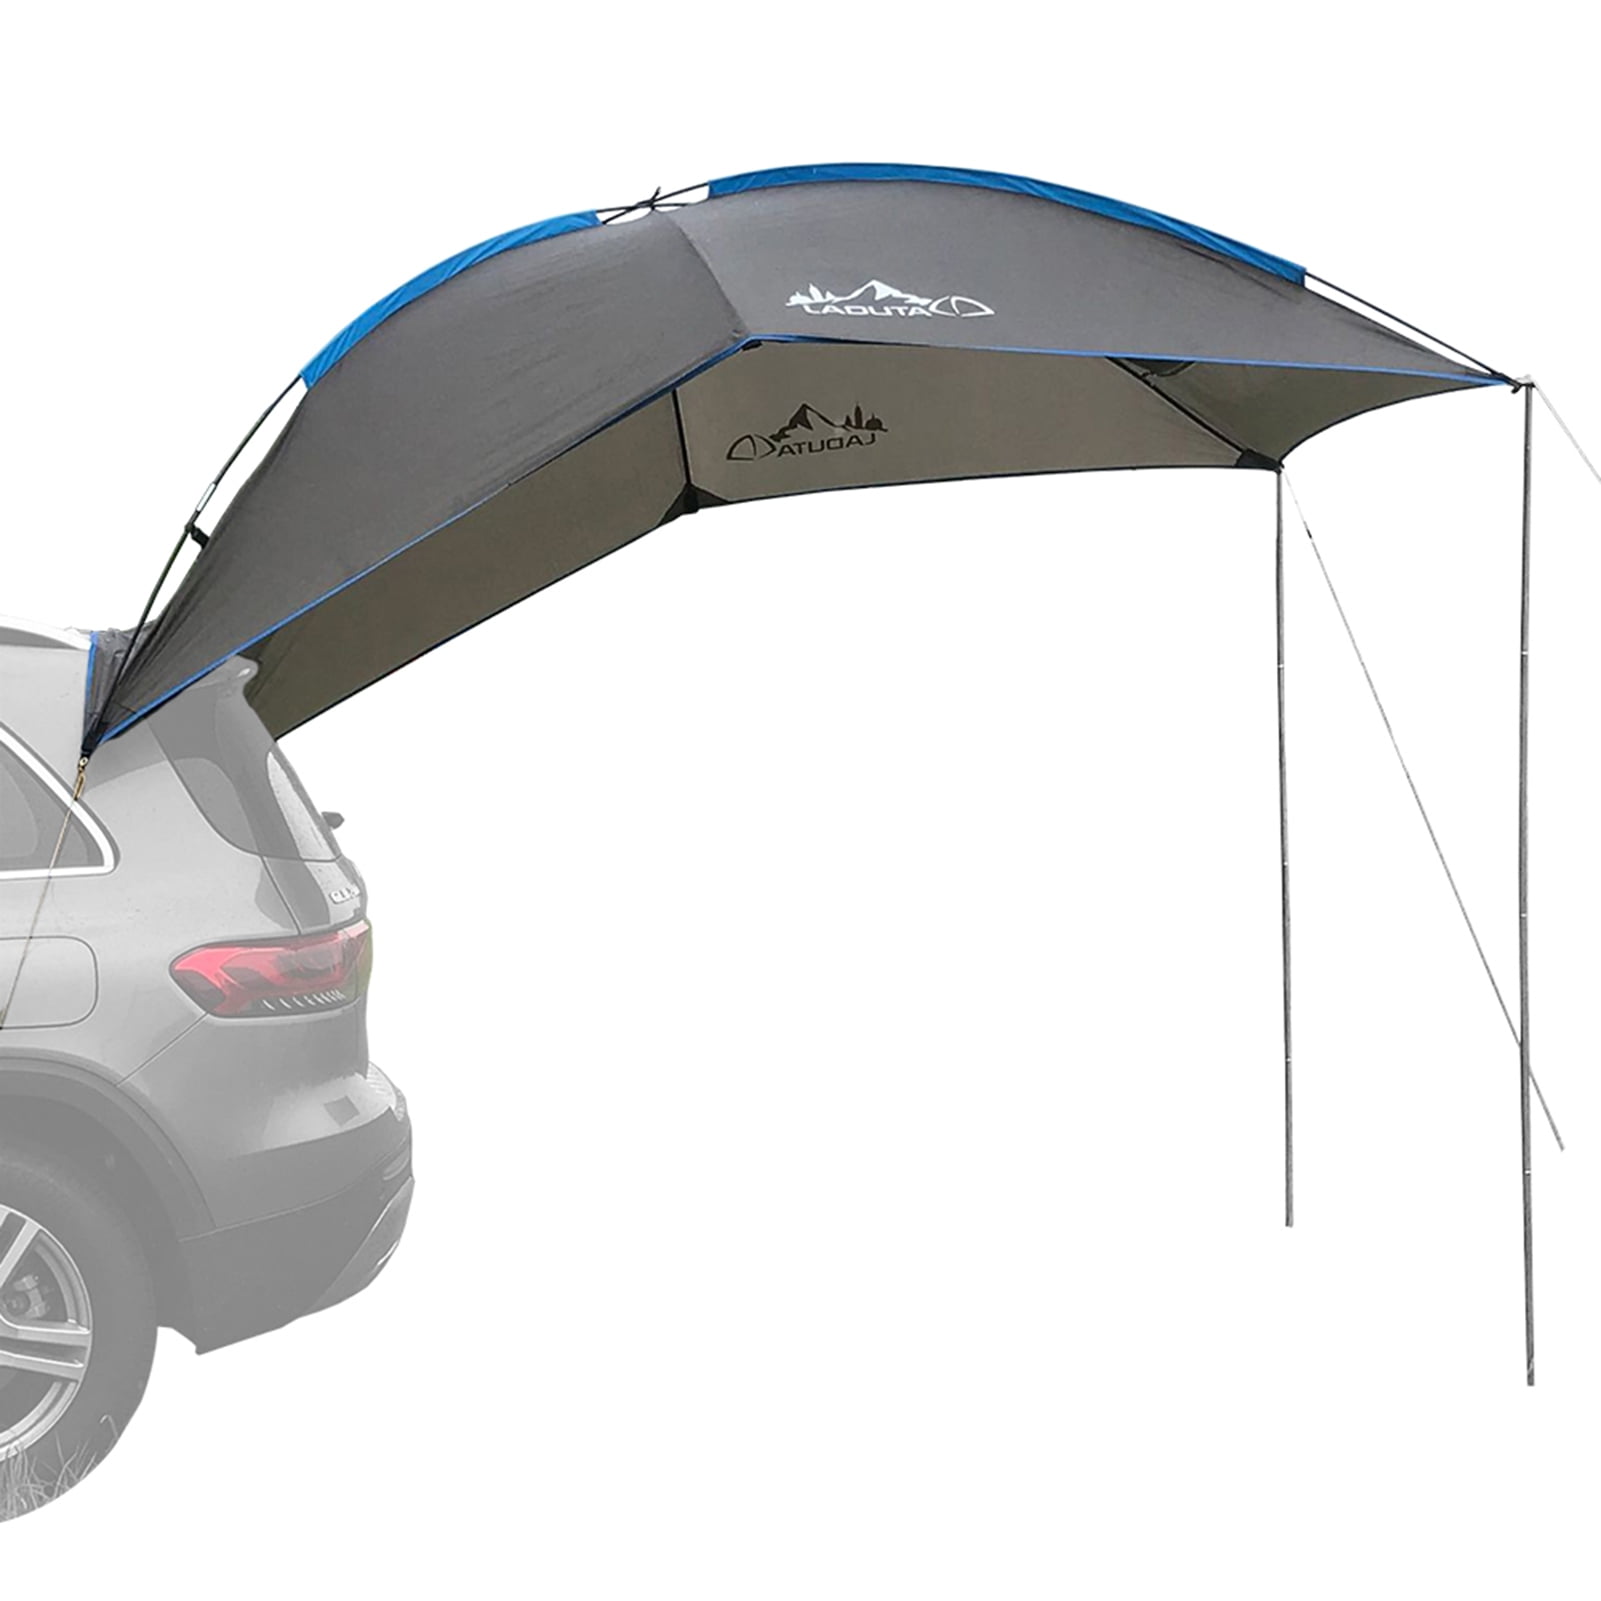 Laduta Portable car rear tent Portable Waterproof Car Rear Tent